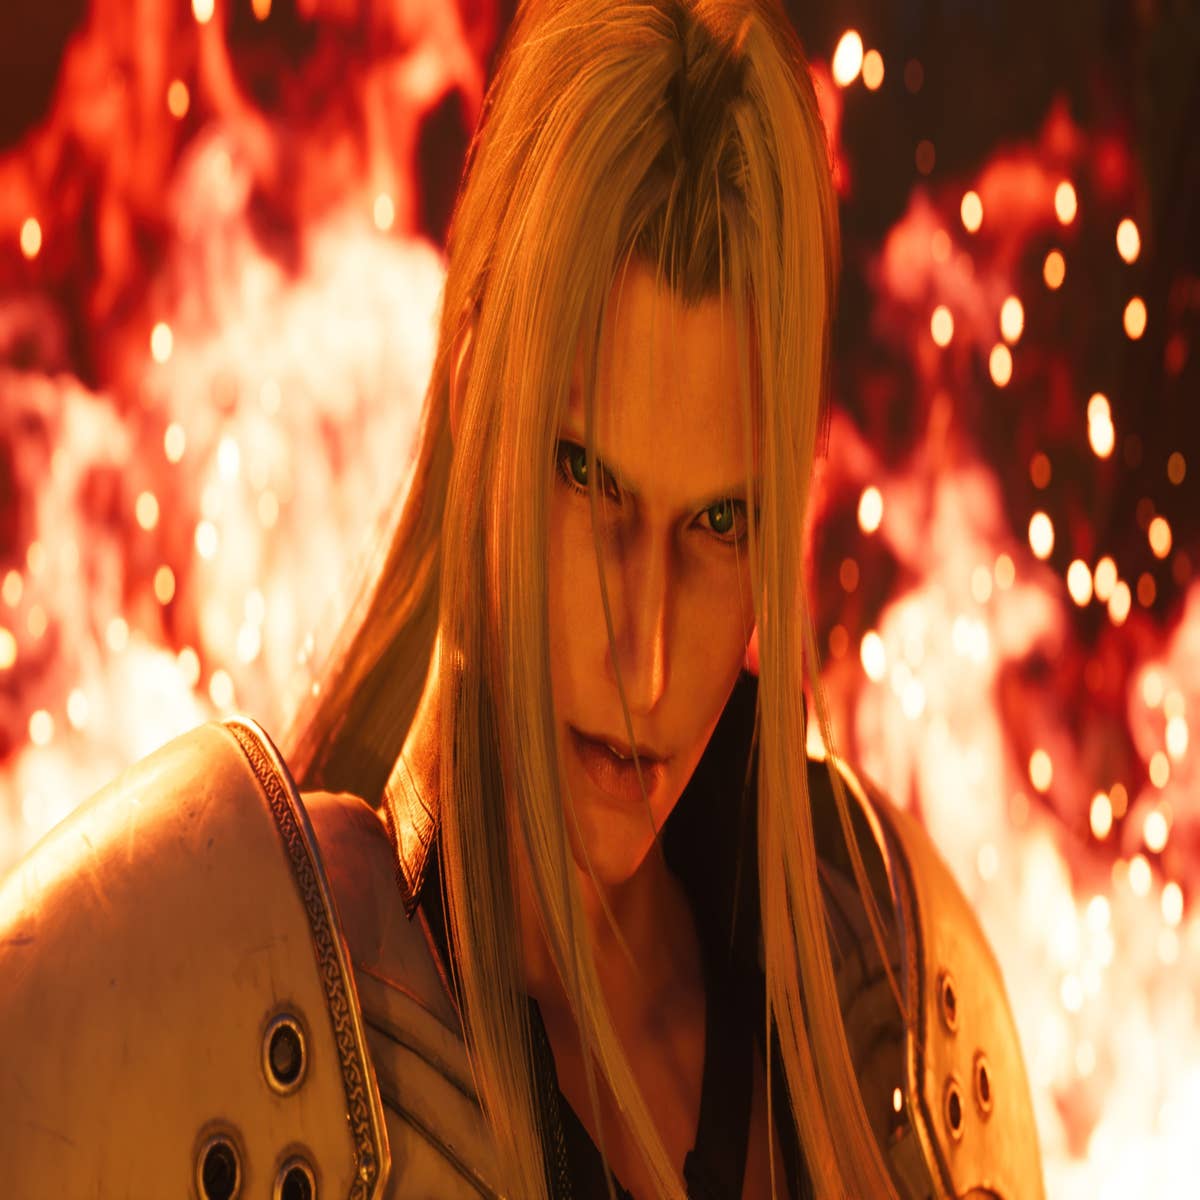 Final Fantasy VII Remake Update 1.001 Released Ahead of FFVII Rebirth